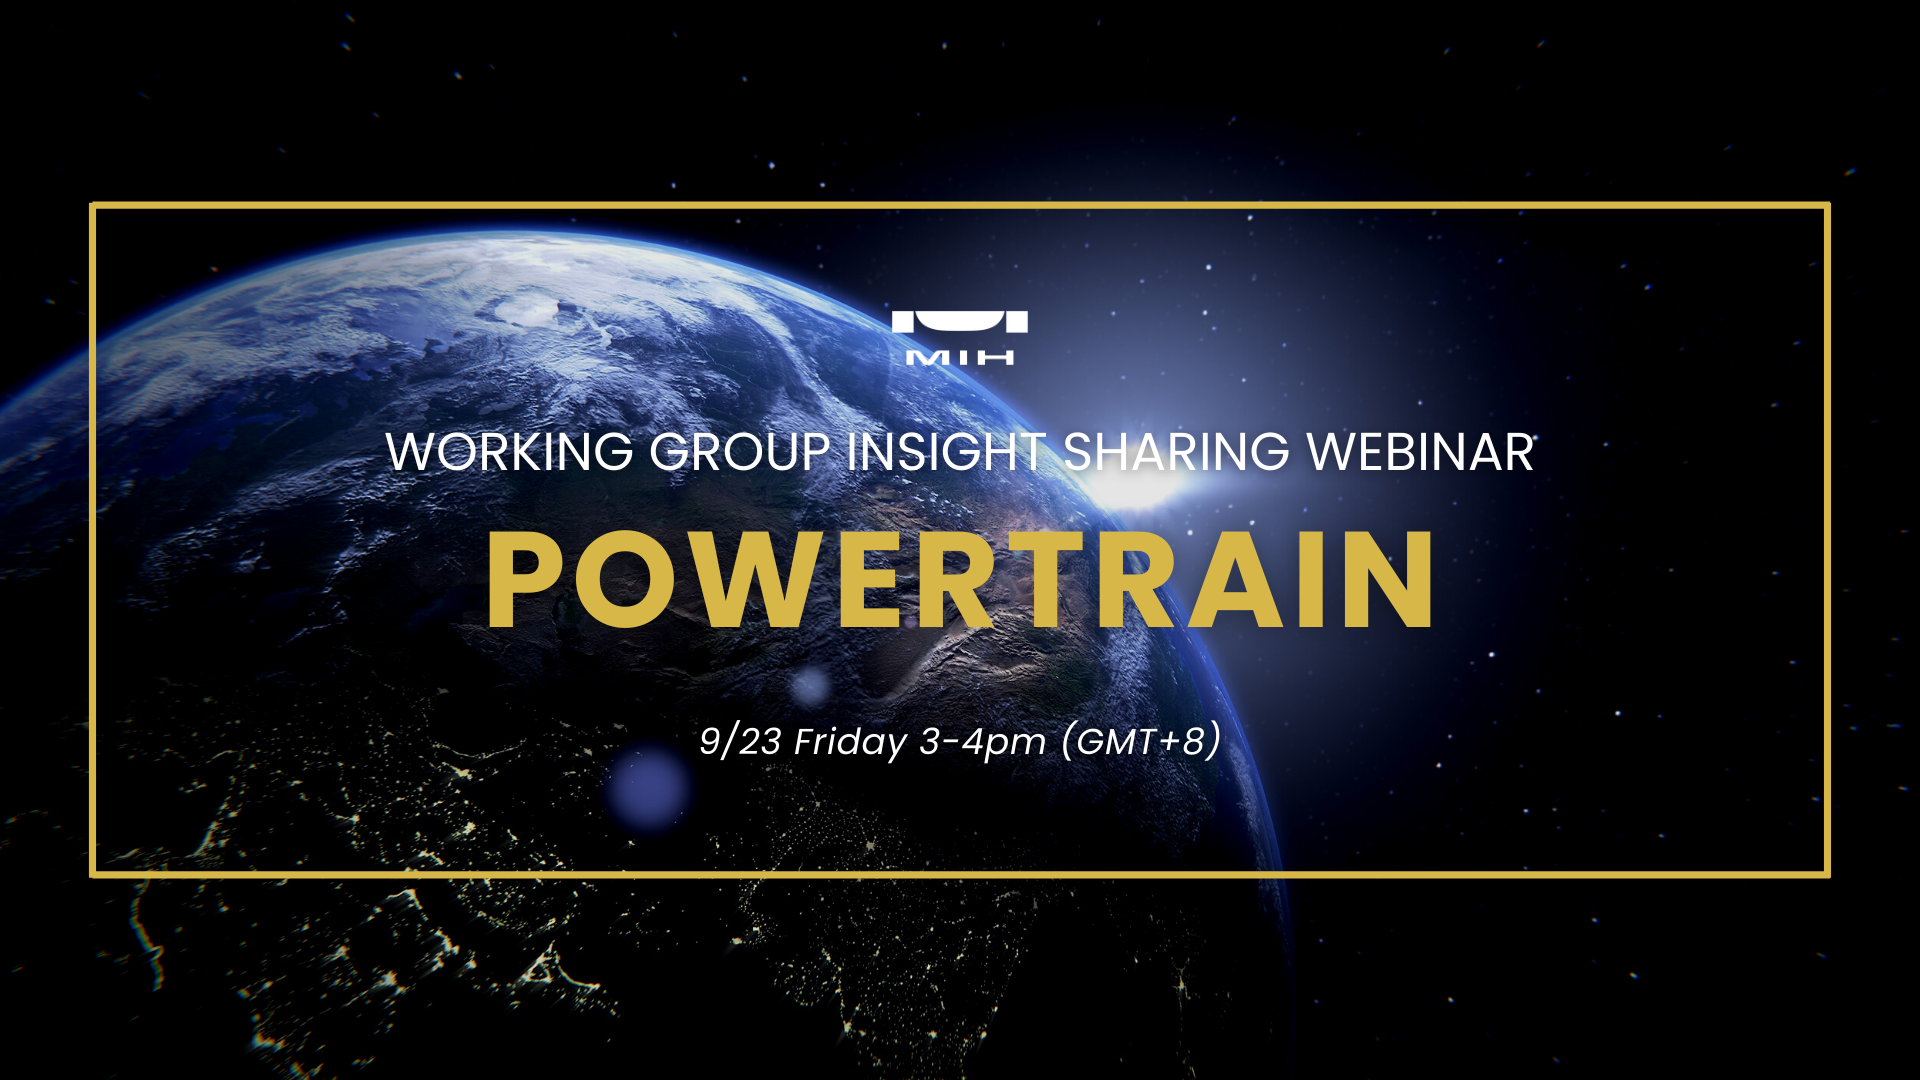 Powertrain Working Group Insight Sharing Webinar | Video Review